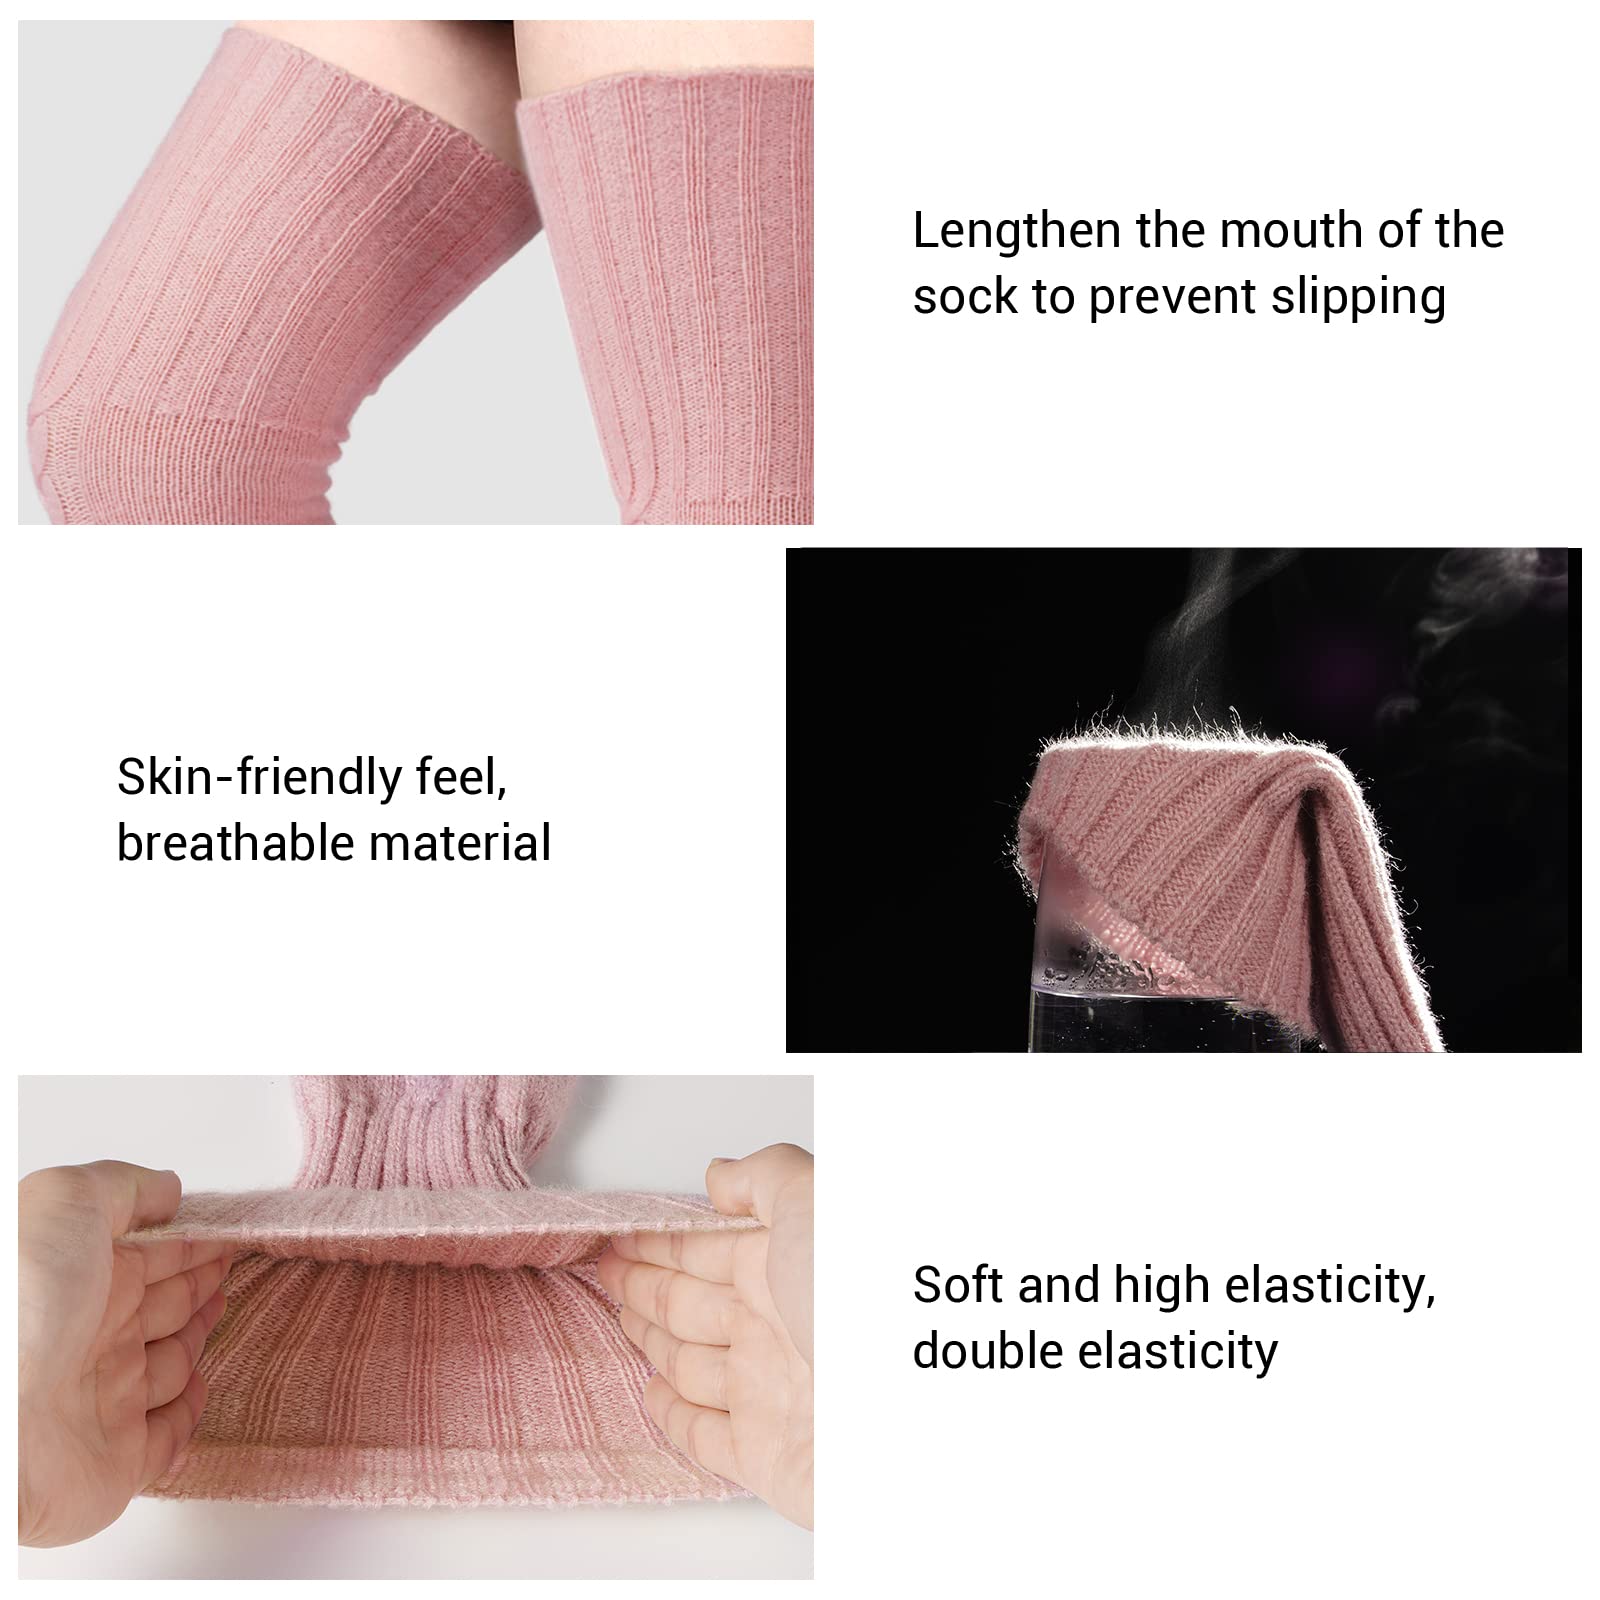 Wool Thigh High Socks Over the Knee Socks - Pink - Moon Wood